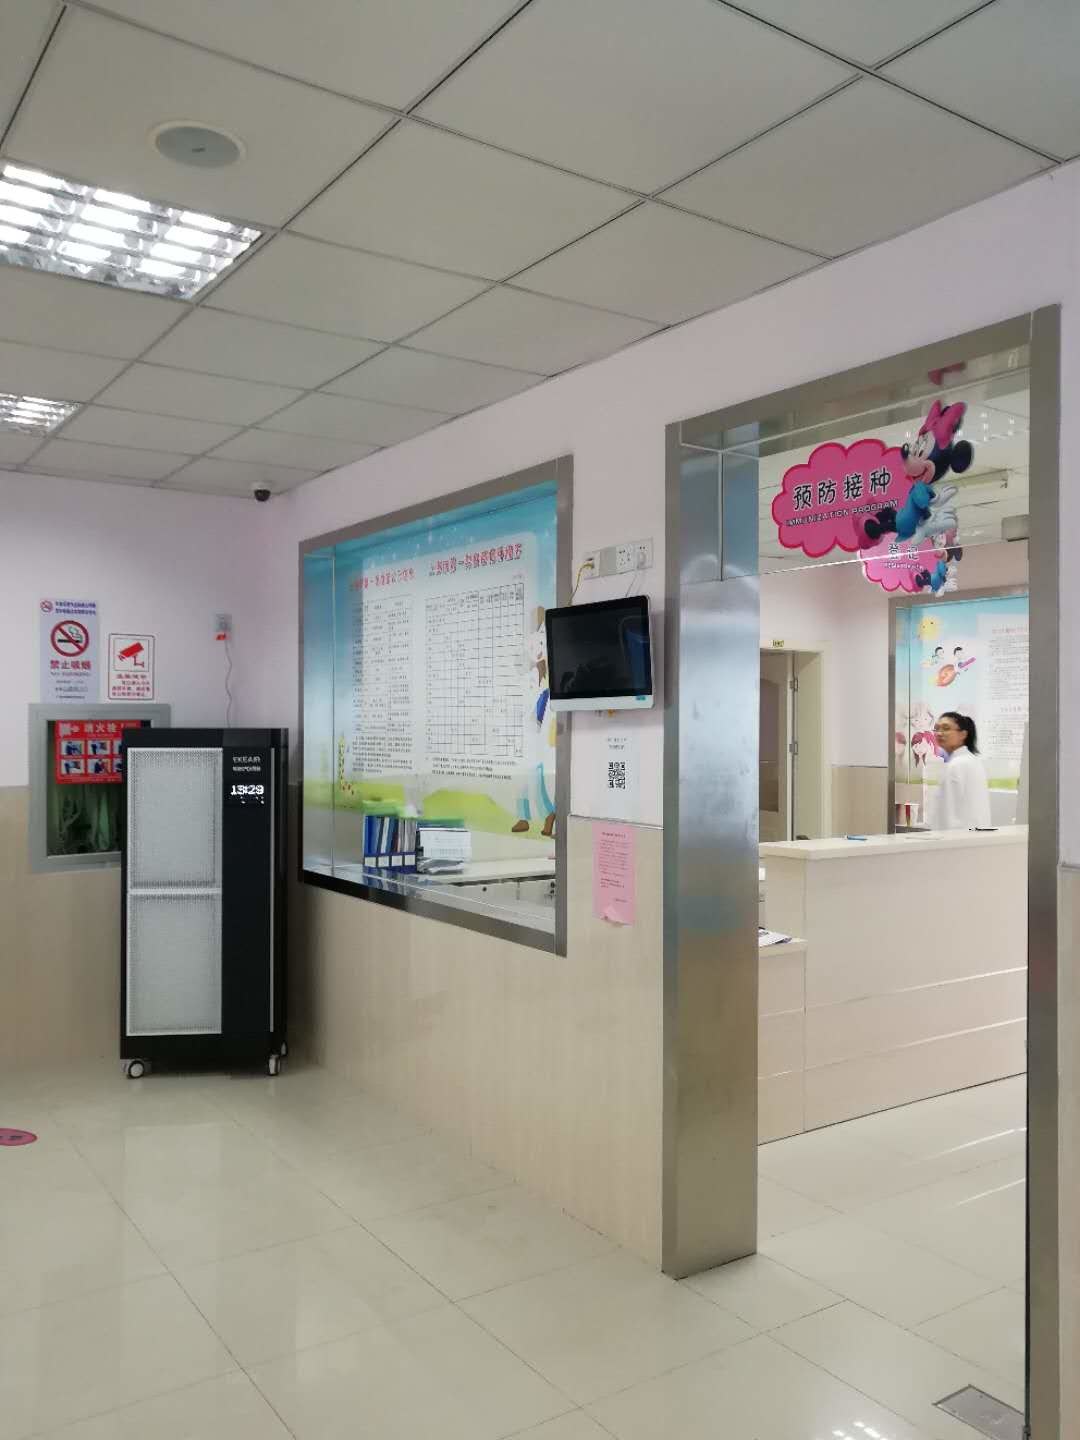 mais recente caso da empresa sobre Centro de saúde da comunidade da cidade de Shanghai Luojing